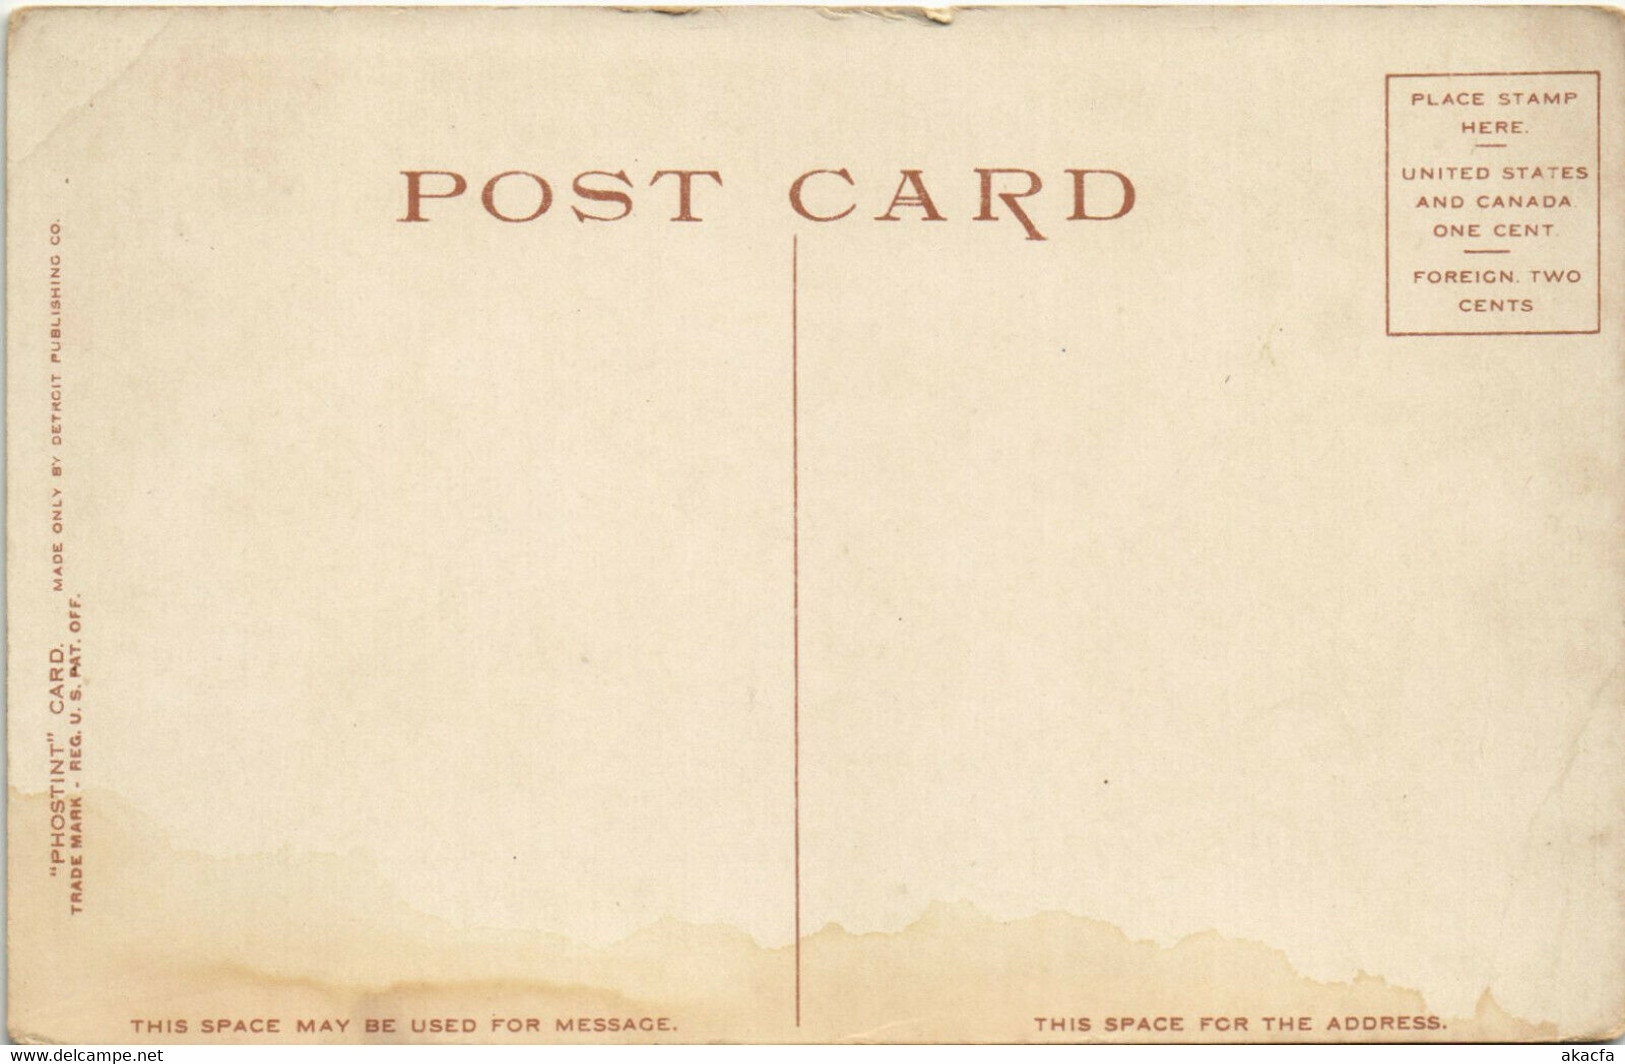 PC US, CO, PUEBLO INDIANS SELLING POTTERY, Vintage Postcard (b34992) - Pueblo